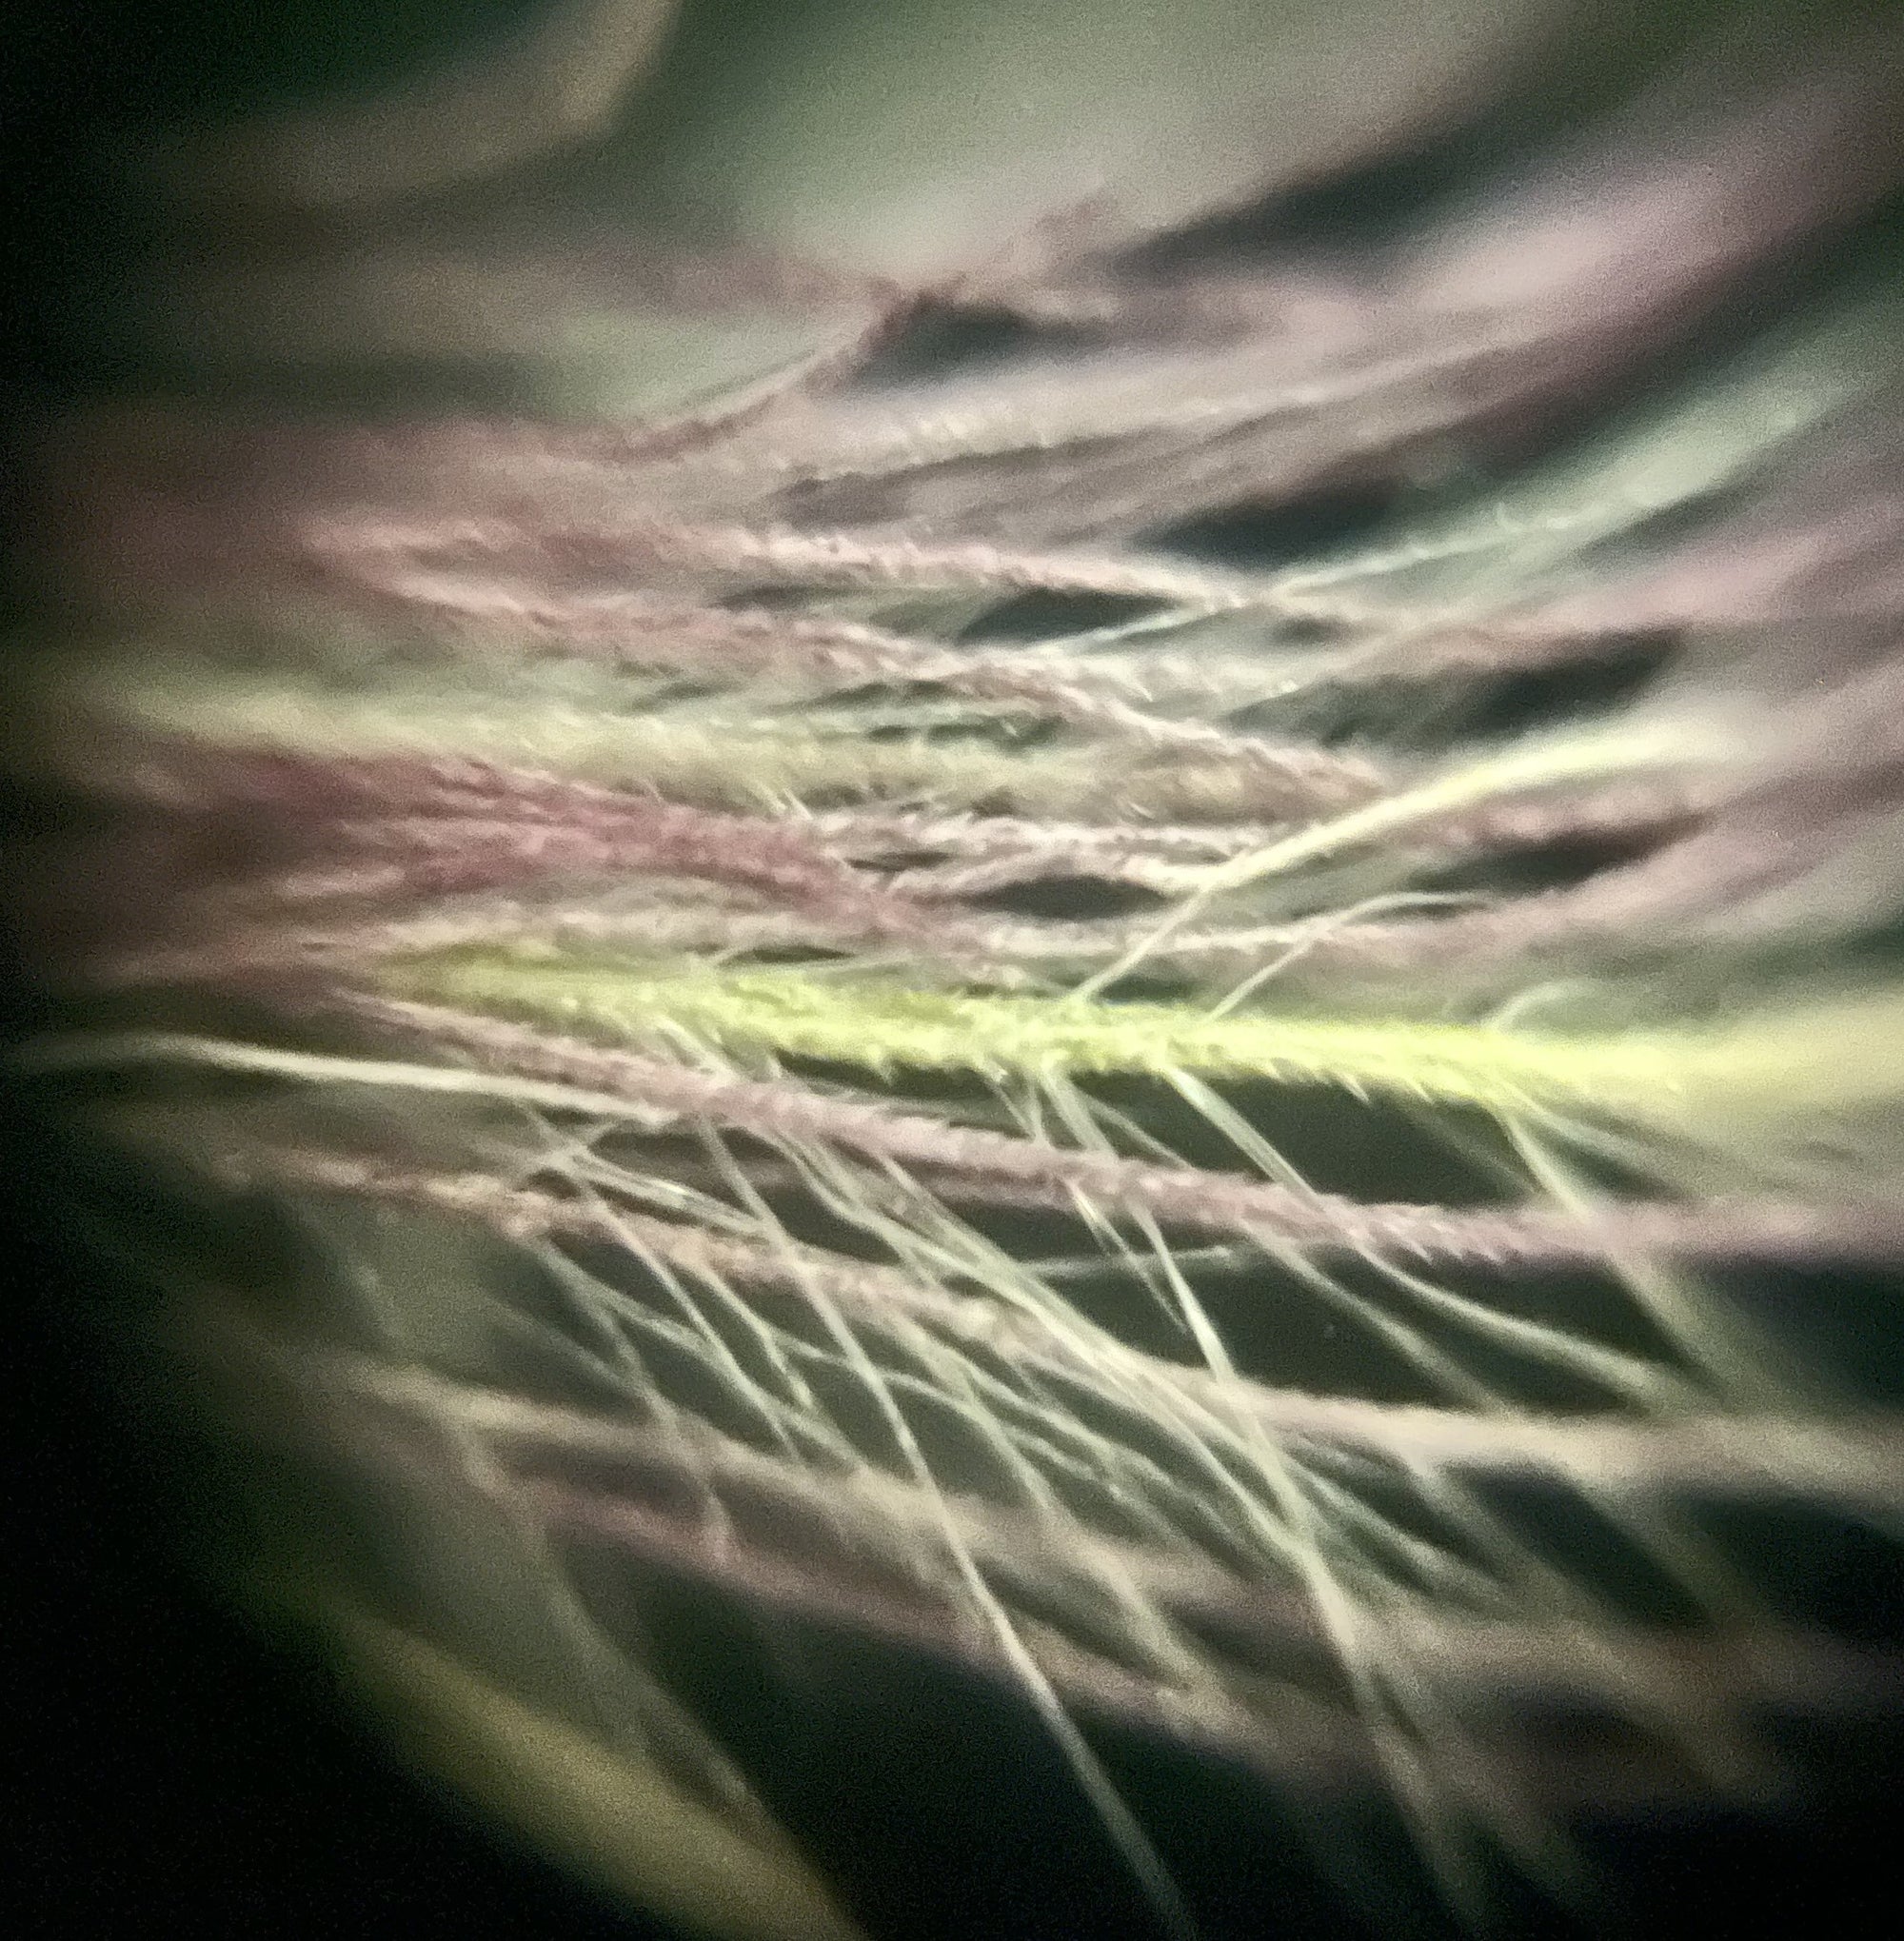 Foldscope Explores... The Secrets of the Seeds